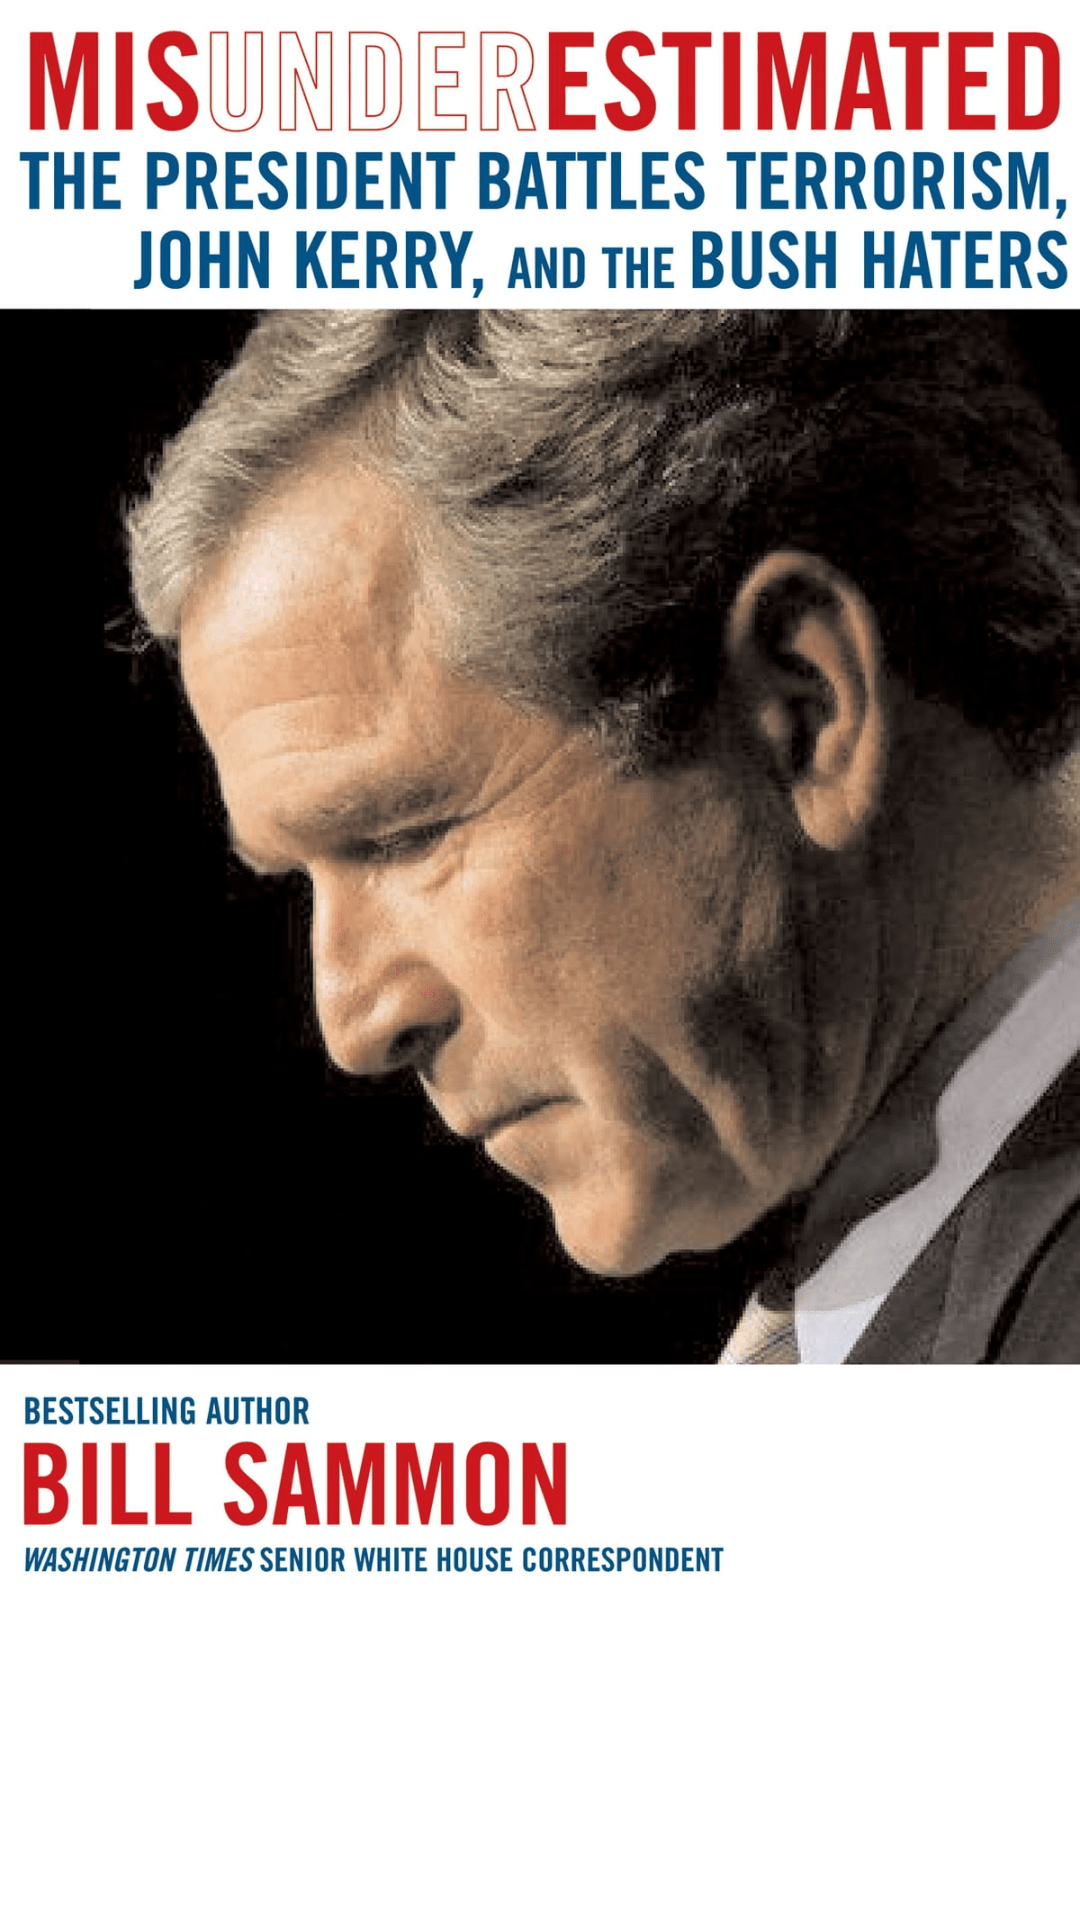 Misunderestimated by Bill Sammon